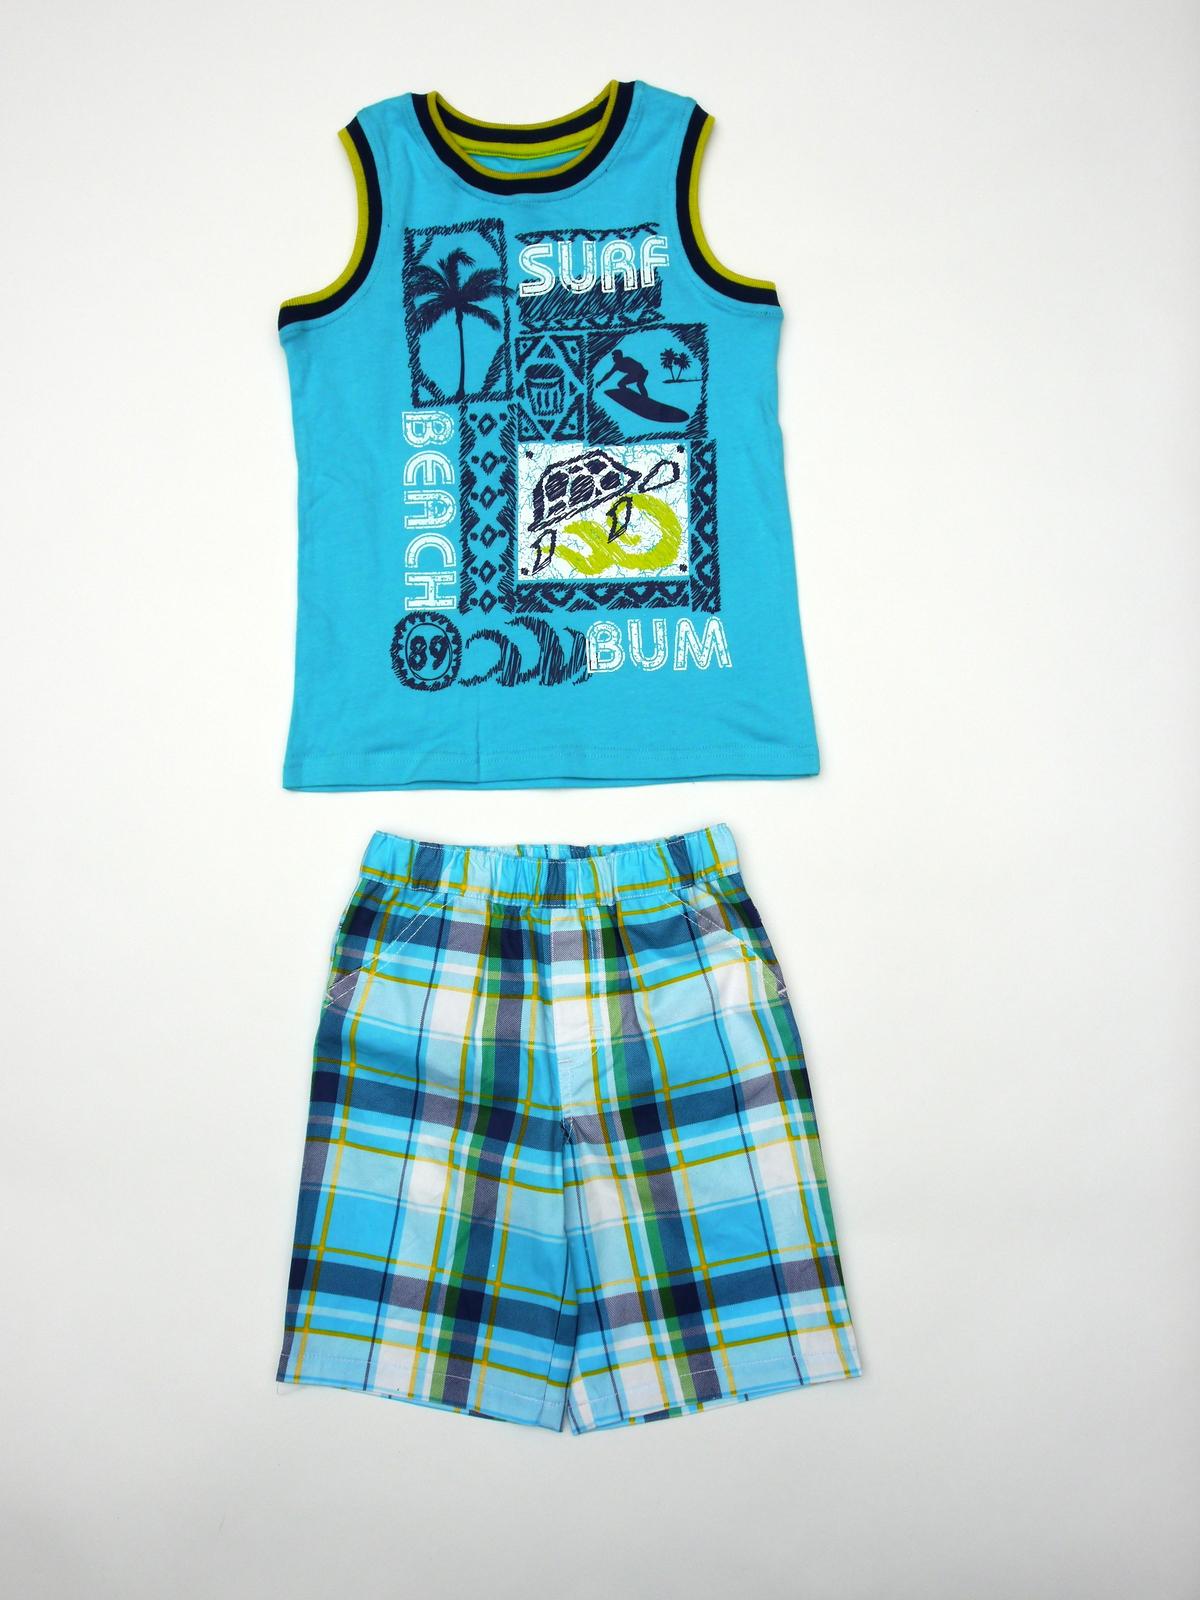 Little Rebels Boy's Graphic Tank Top & Shorts Set - Surf Bum